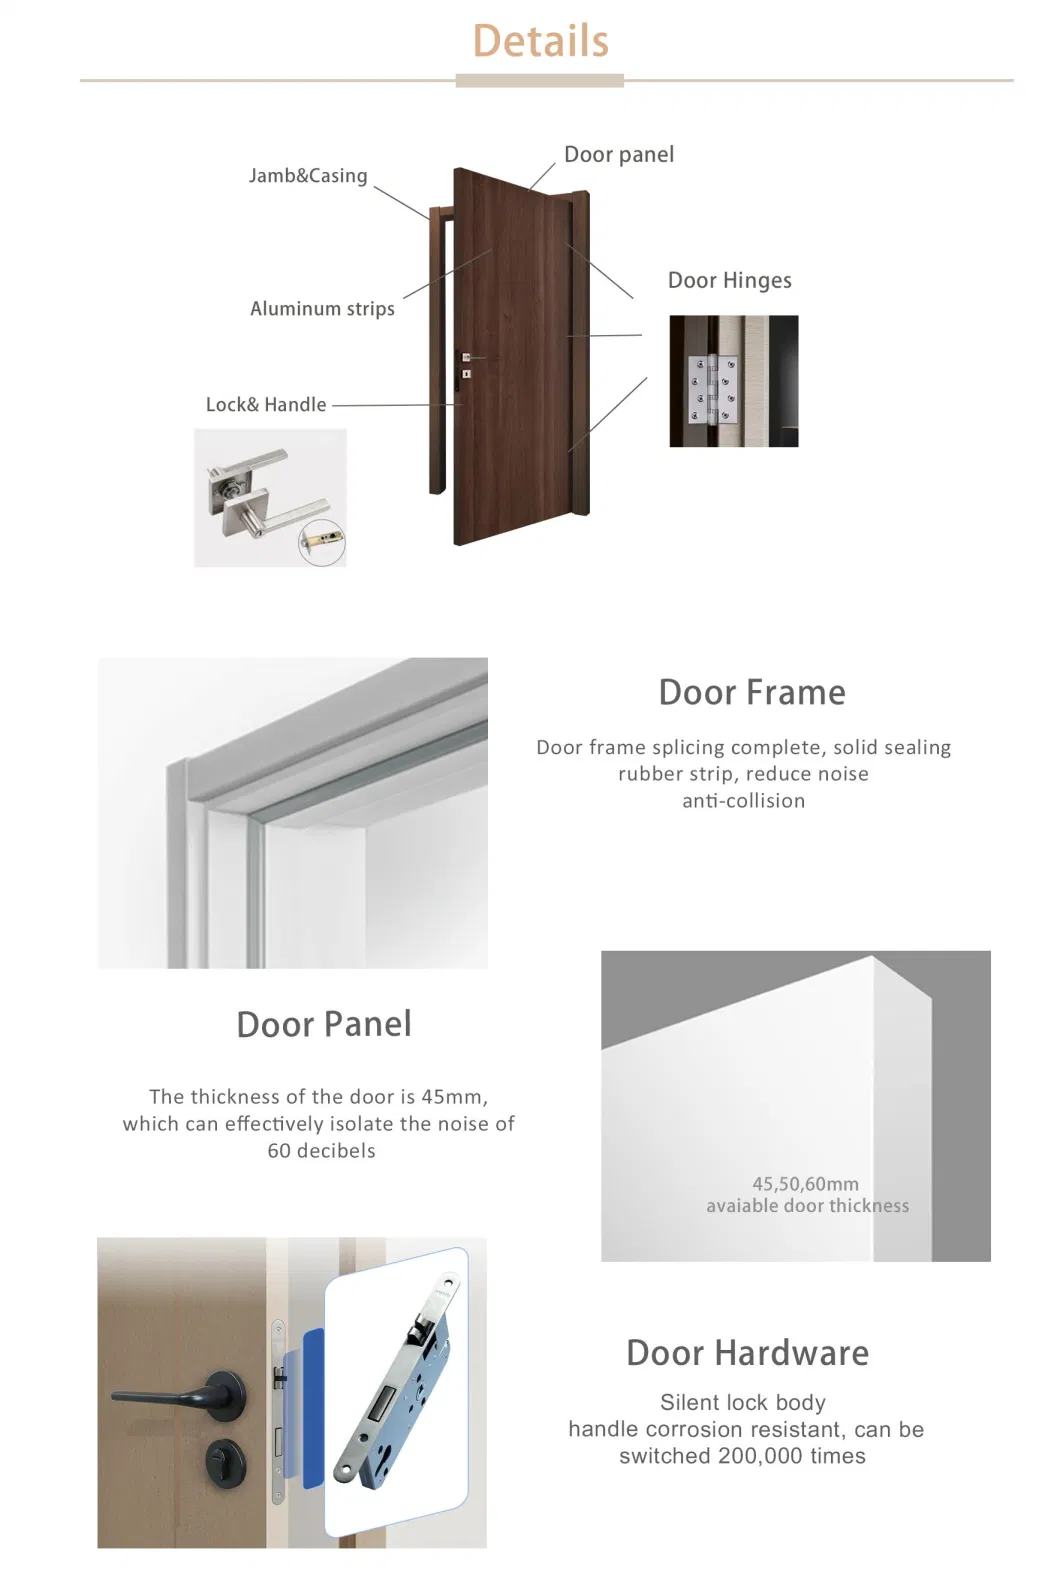 Kudas House Internal Black Industrial Studio Clear Glass Door Aluminium Double Interior Metal French Glass Doors